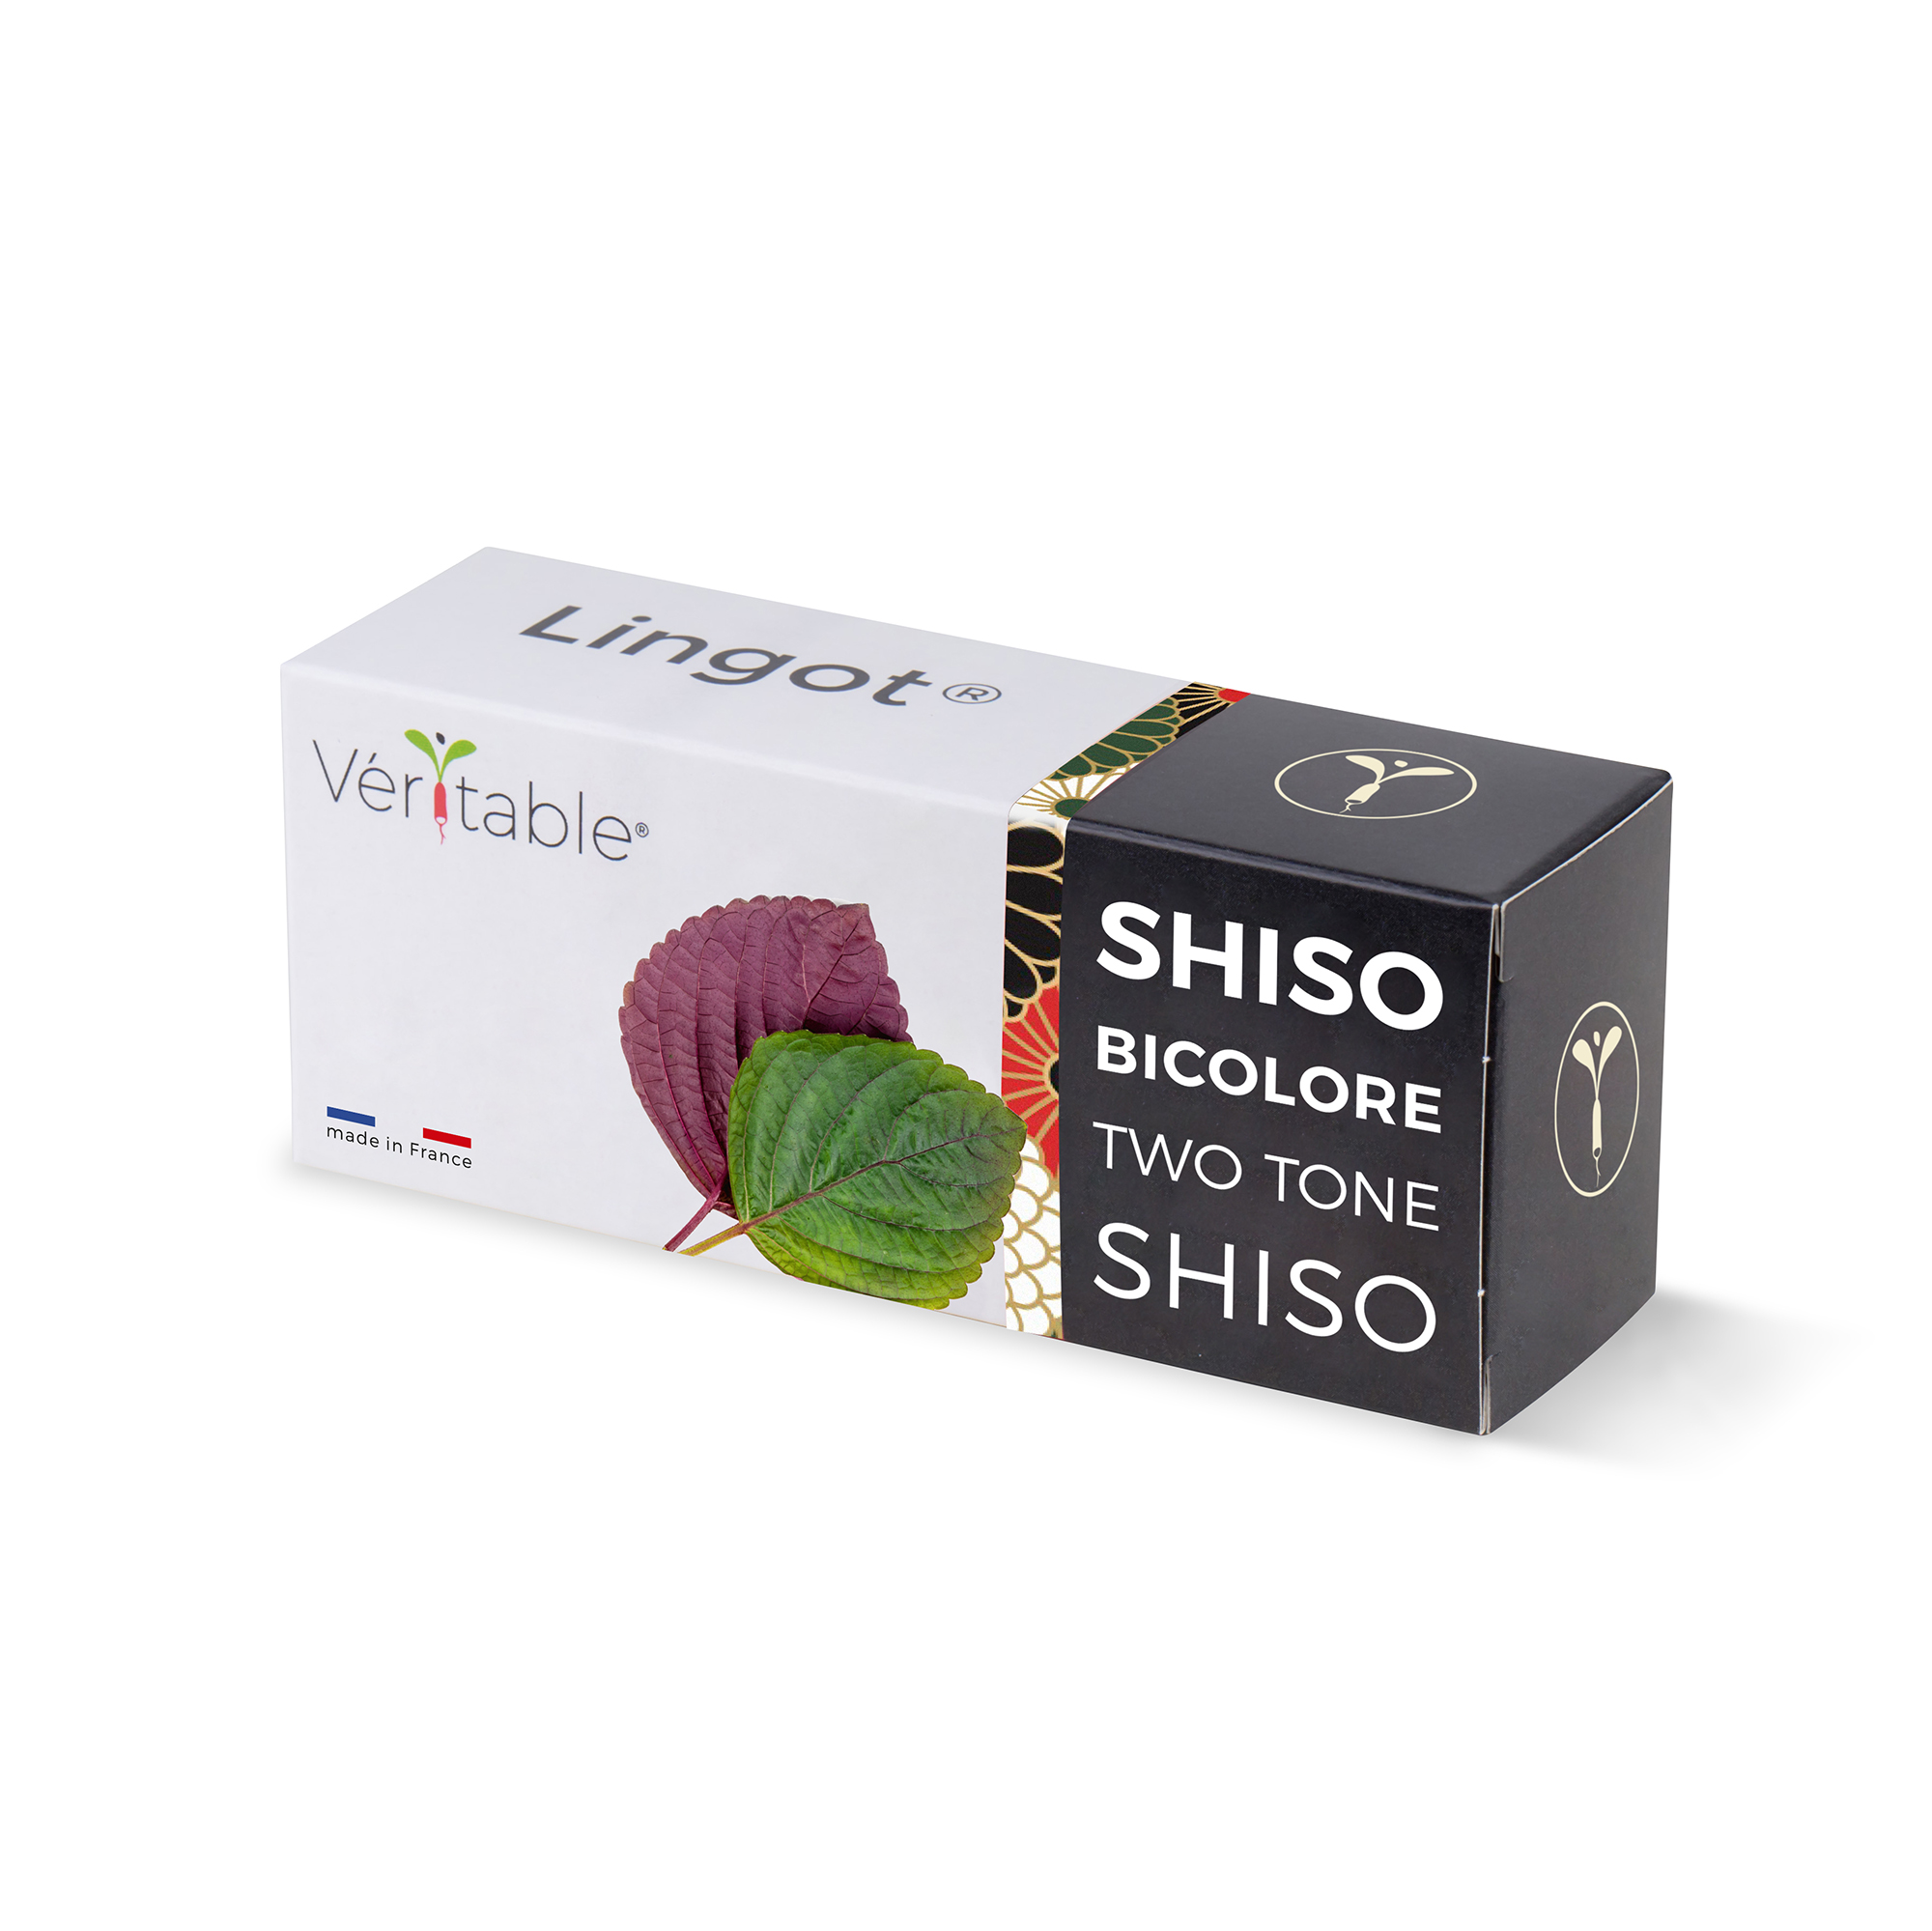 Lingot shiso bicolore